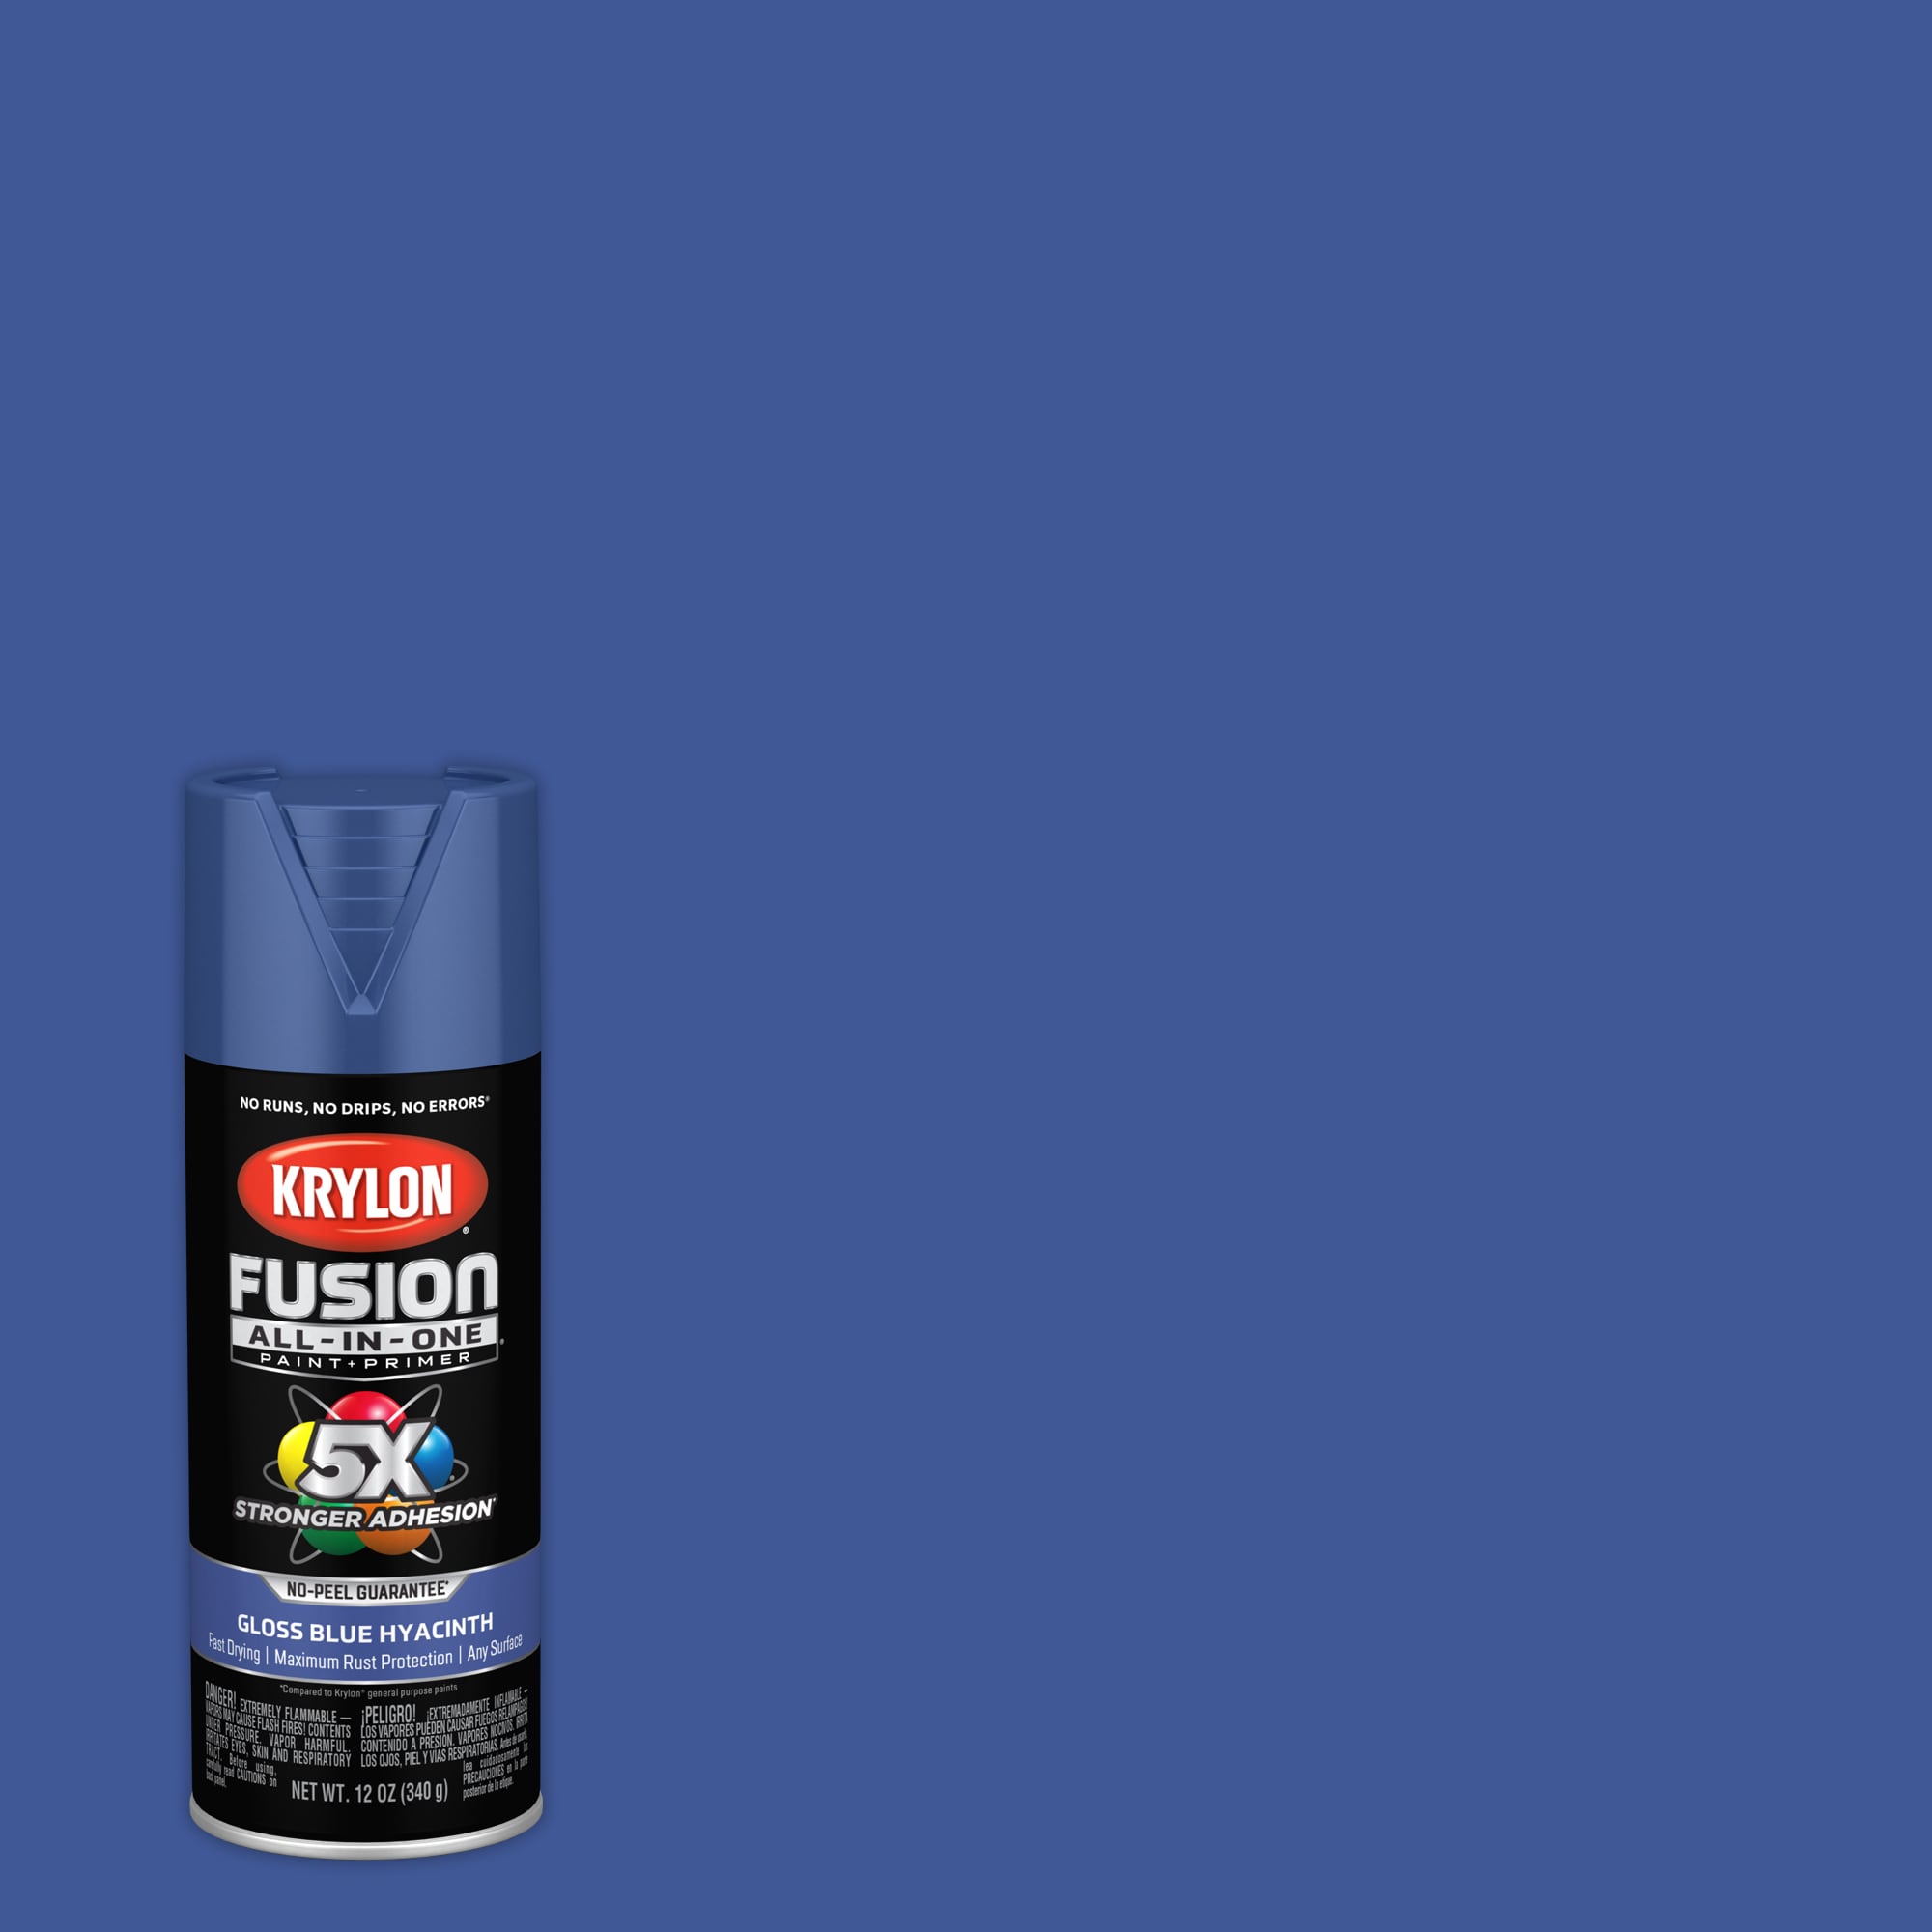 Krylon Industrial K01910A07 Spray Paint, True Blue, Gloss